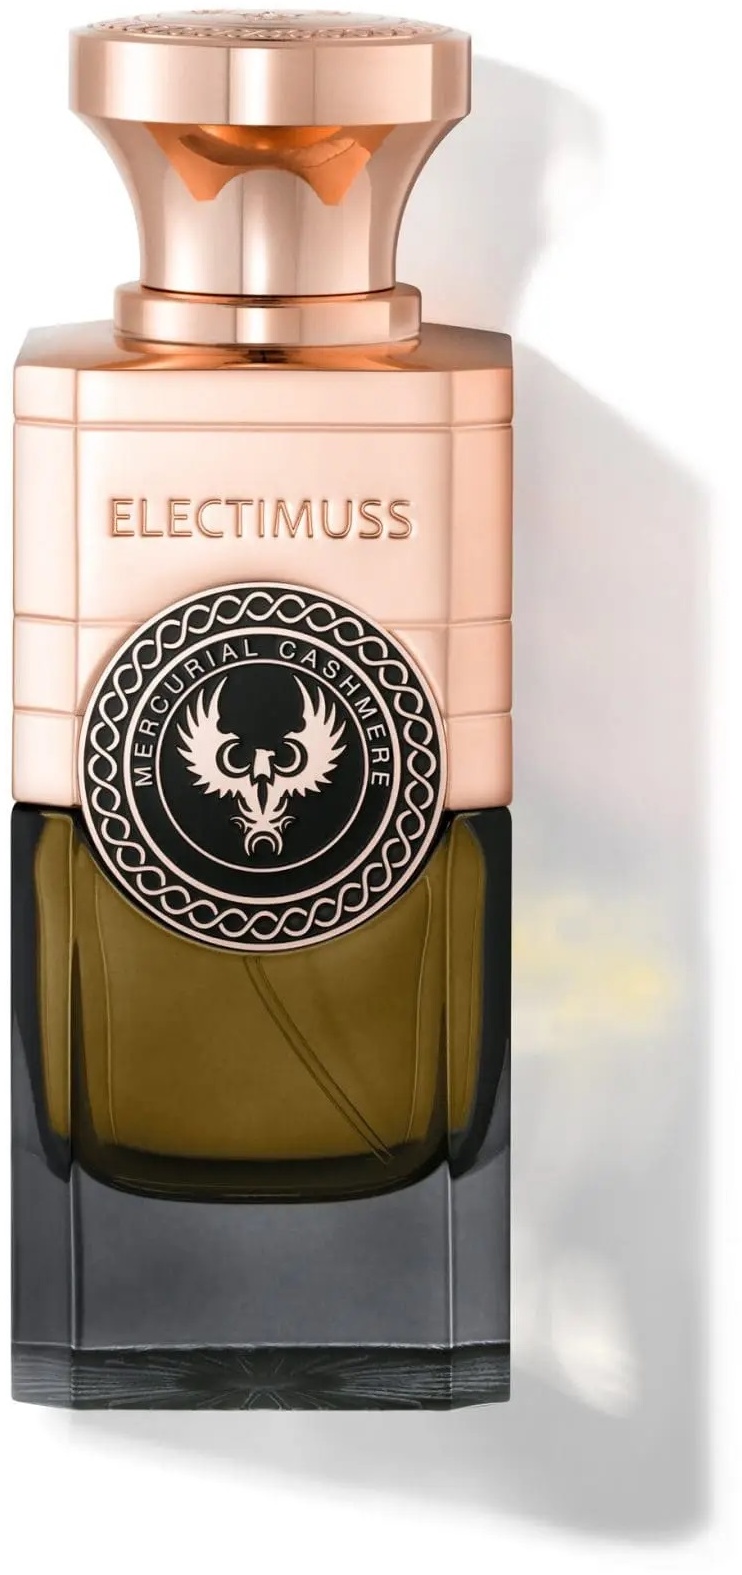 Probenabfüllungen Electimuss - Mercurial Cashmere Extrait de Parfum